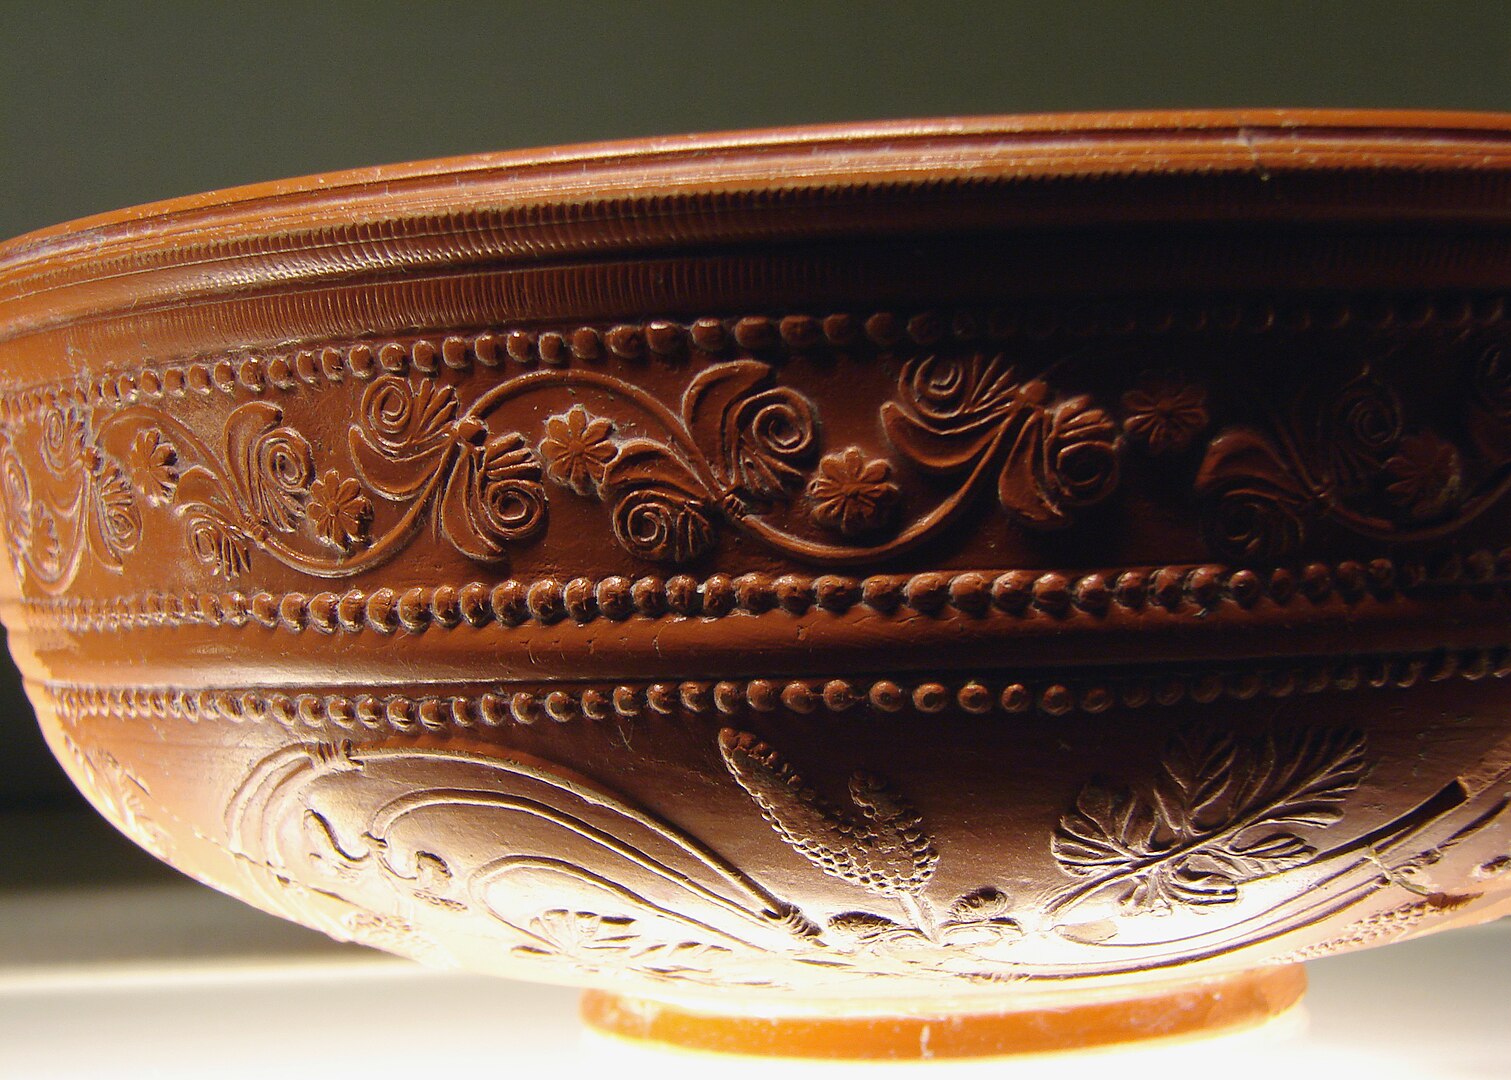 Decorated terra sigillata bowl from Gaul